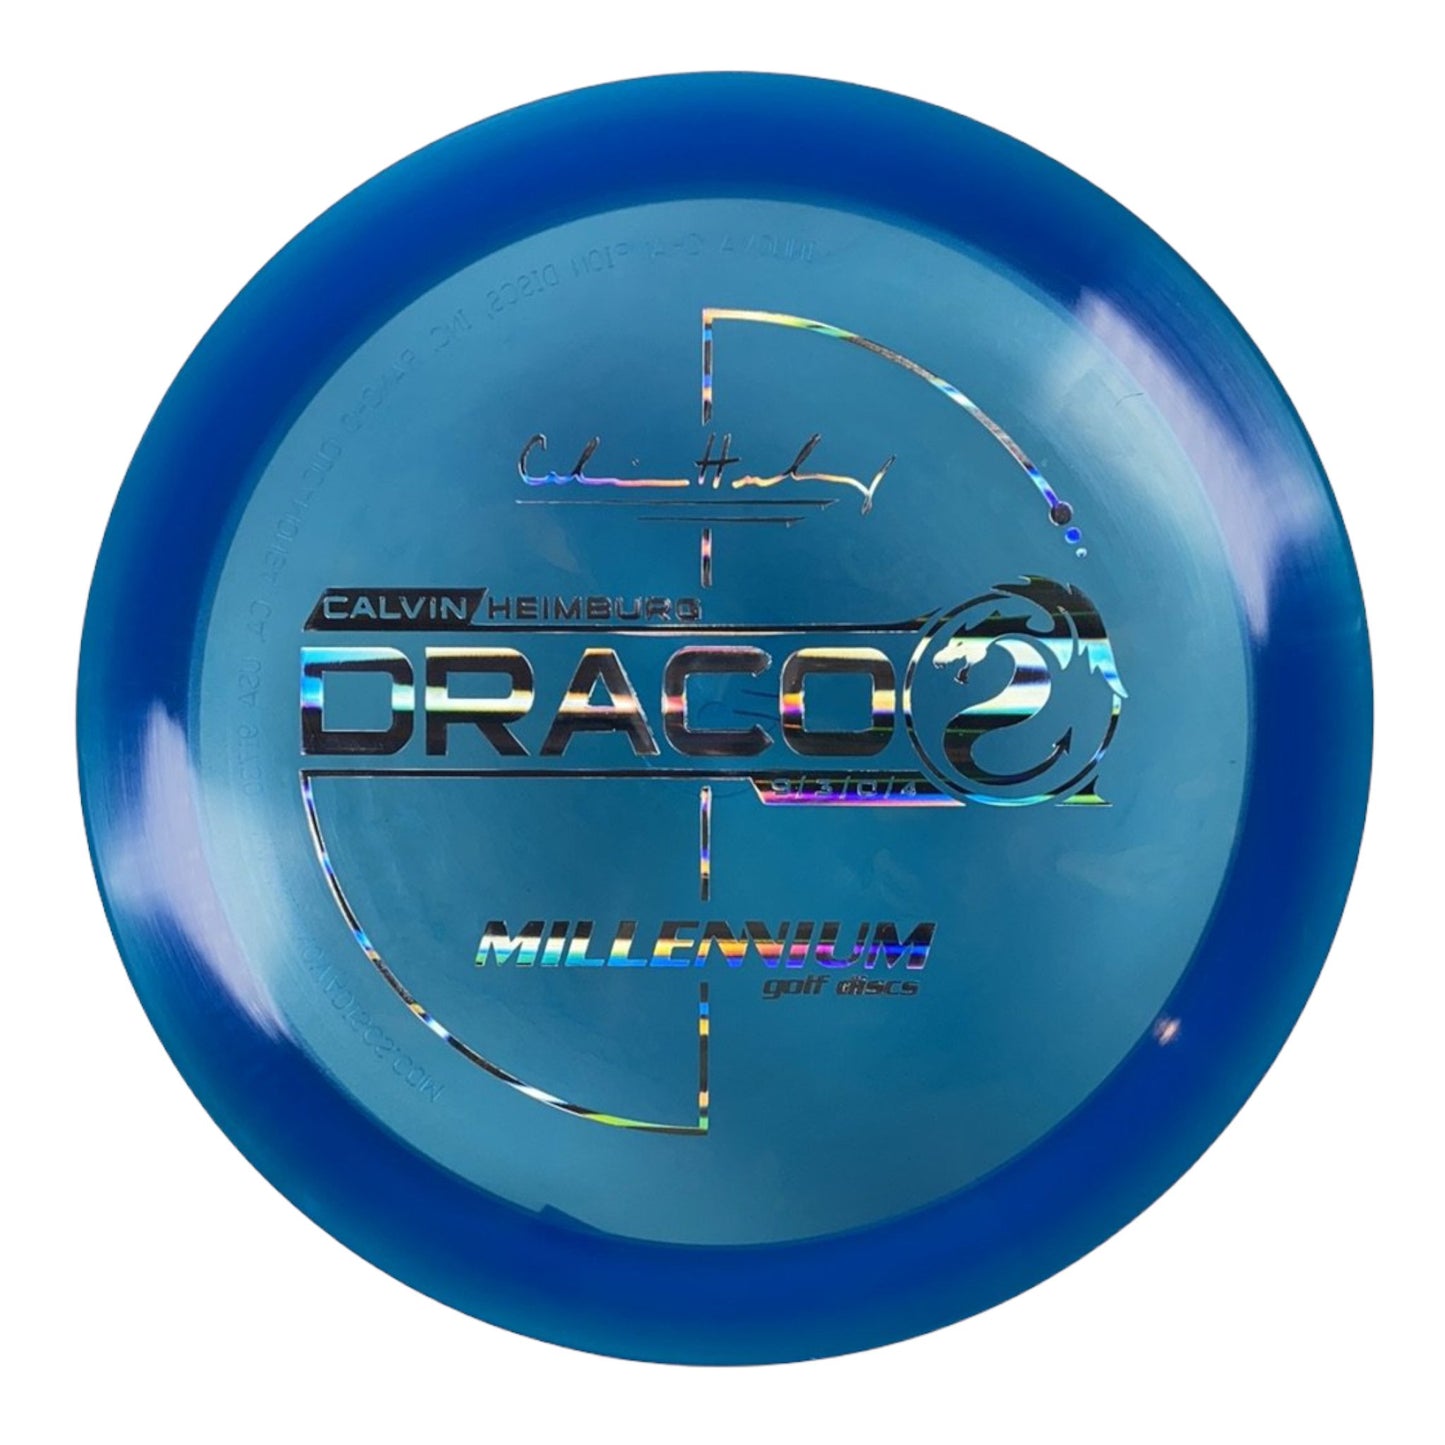 Millennium Golf Discs Draco | Quantum | Blue/Holo 171g (Calvin Heimburg) Disc Golf